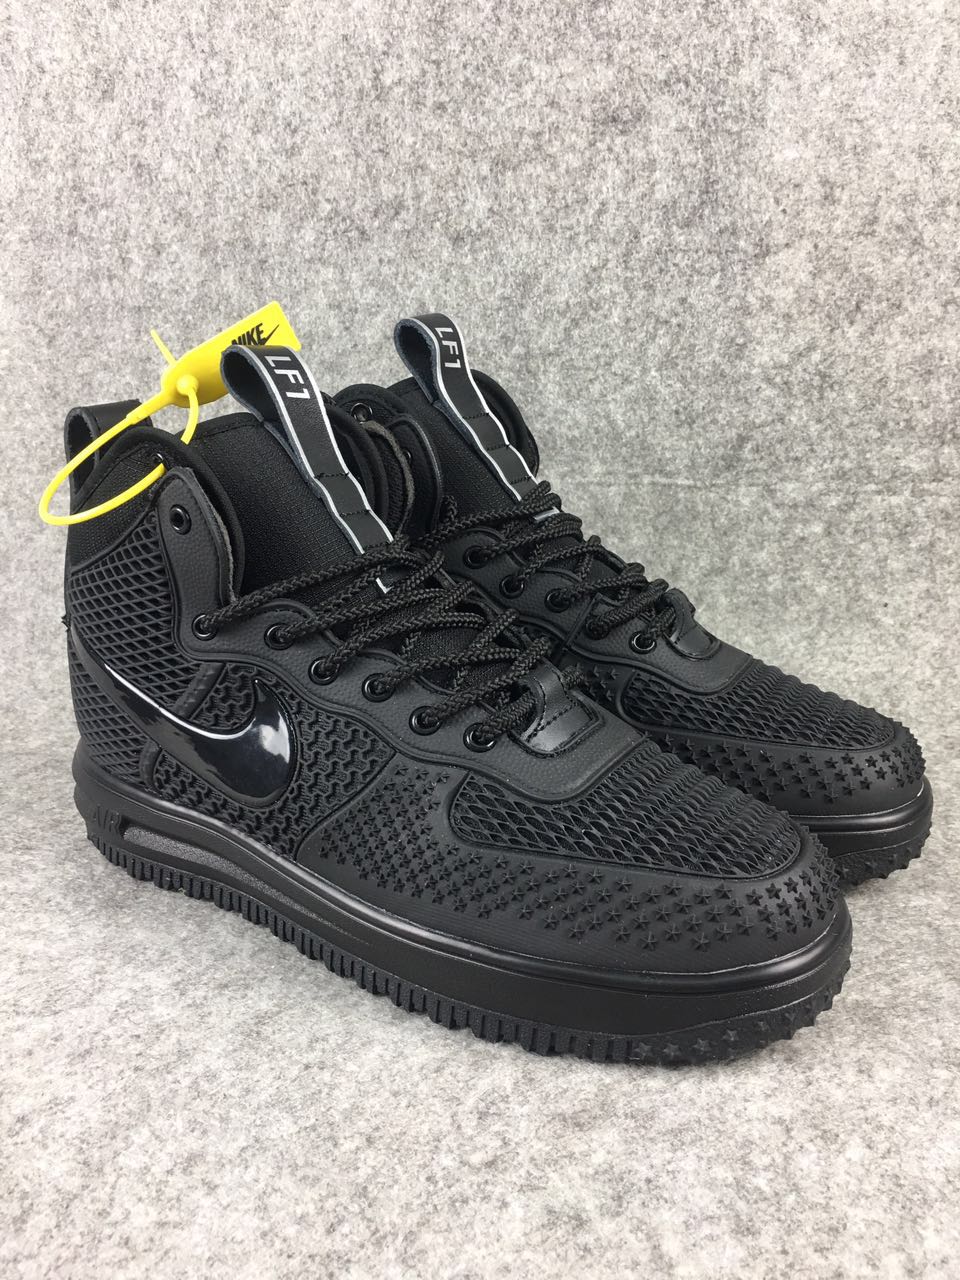 Nike Lunar Force 1 Nano All Black Shoes